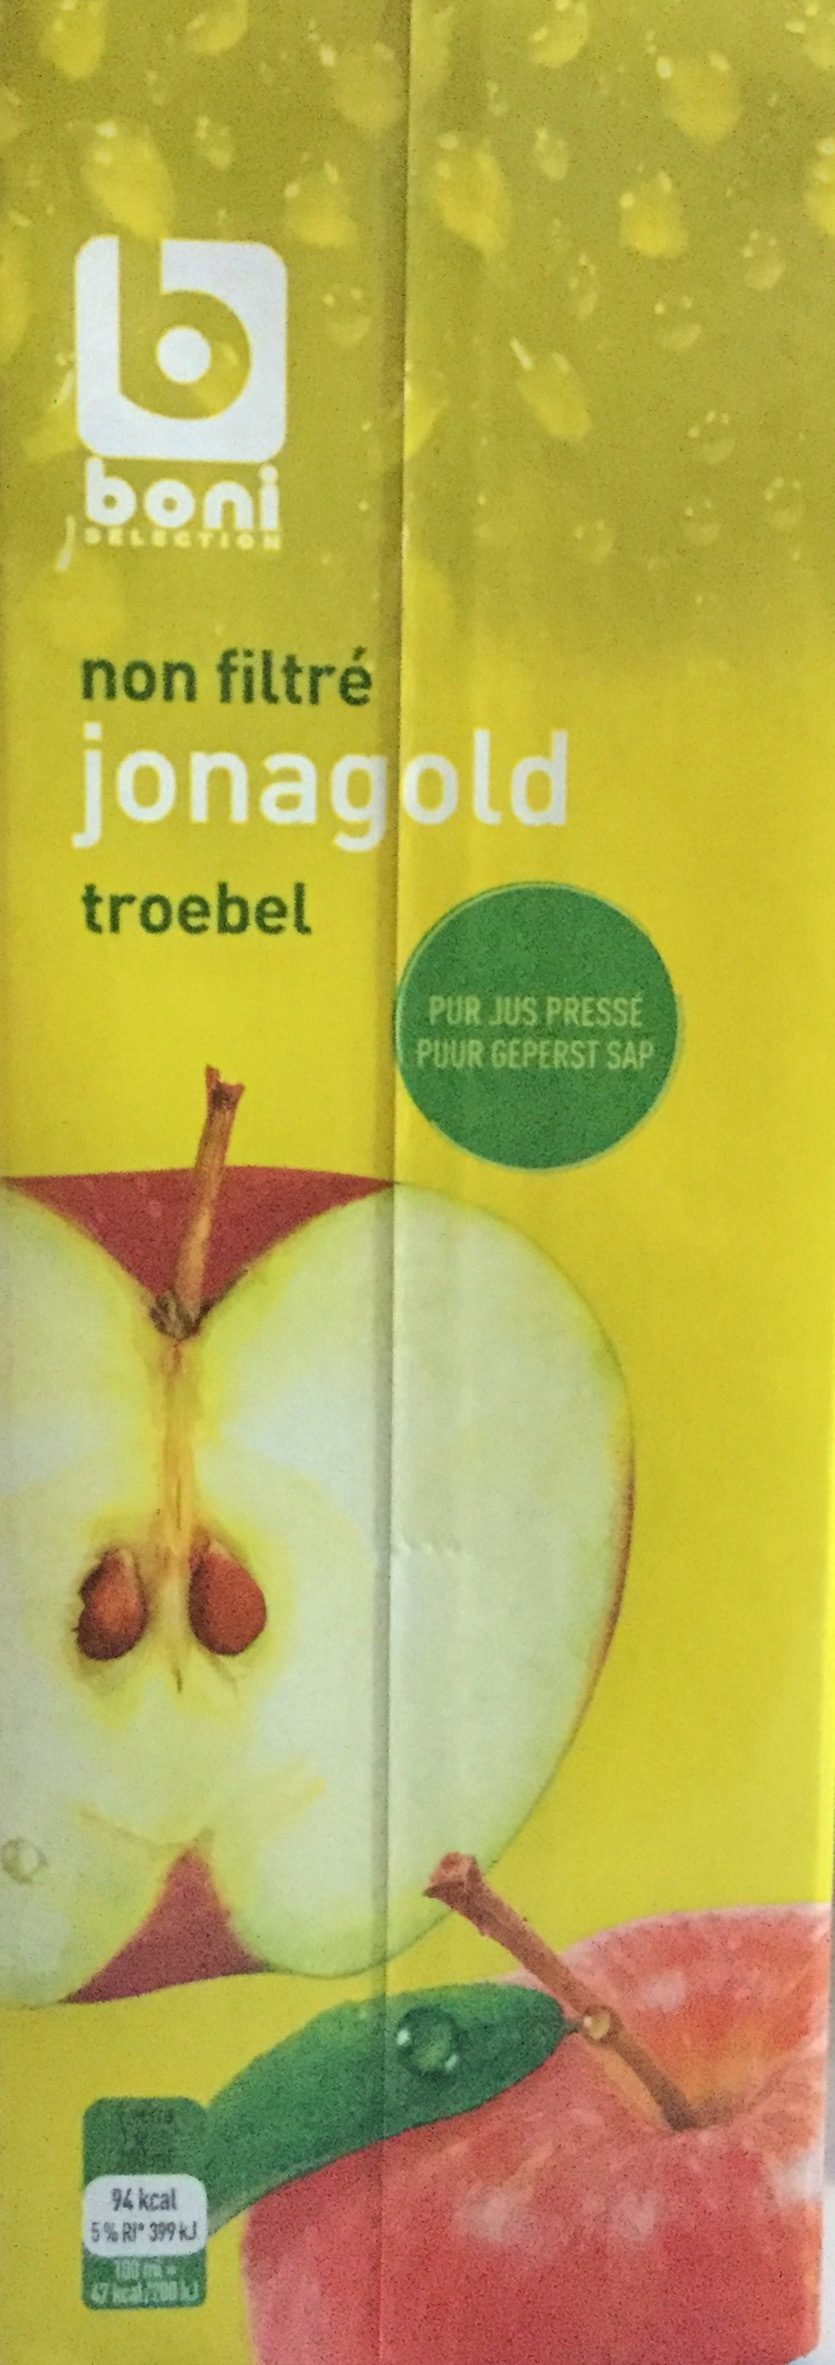 Jus de pommes jonagold - Product - fr